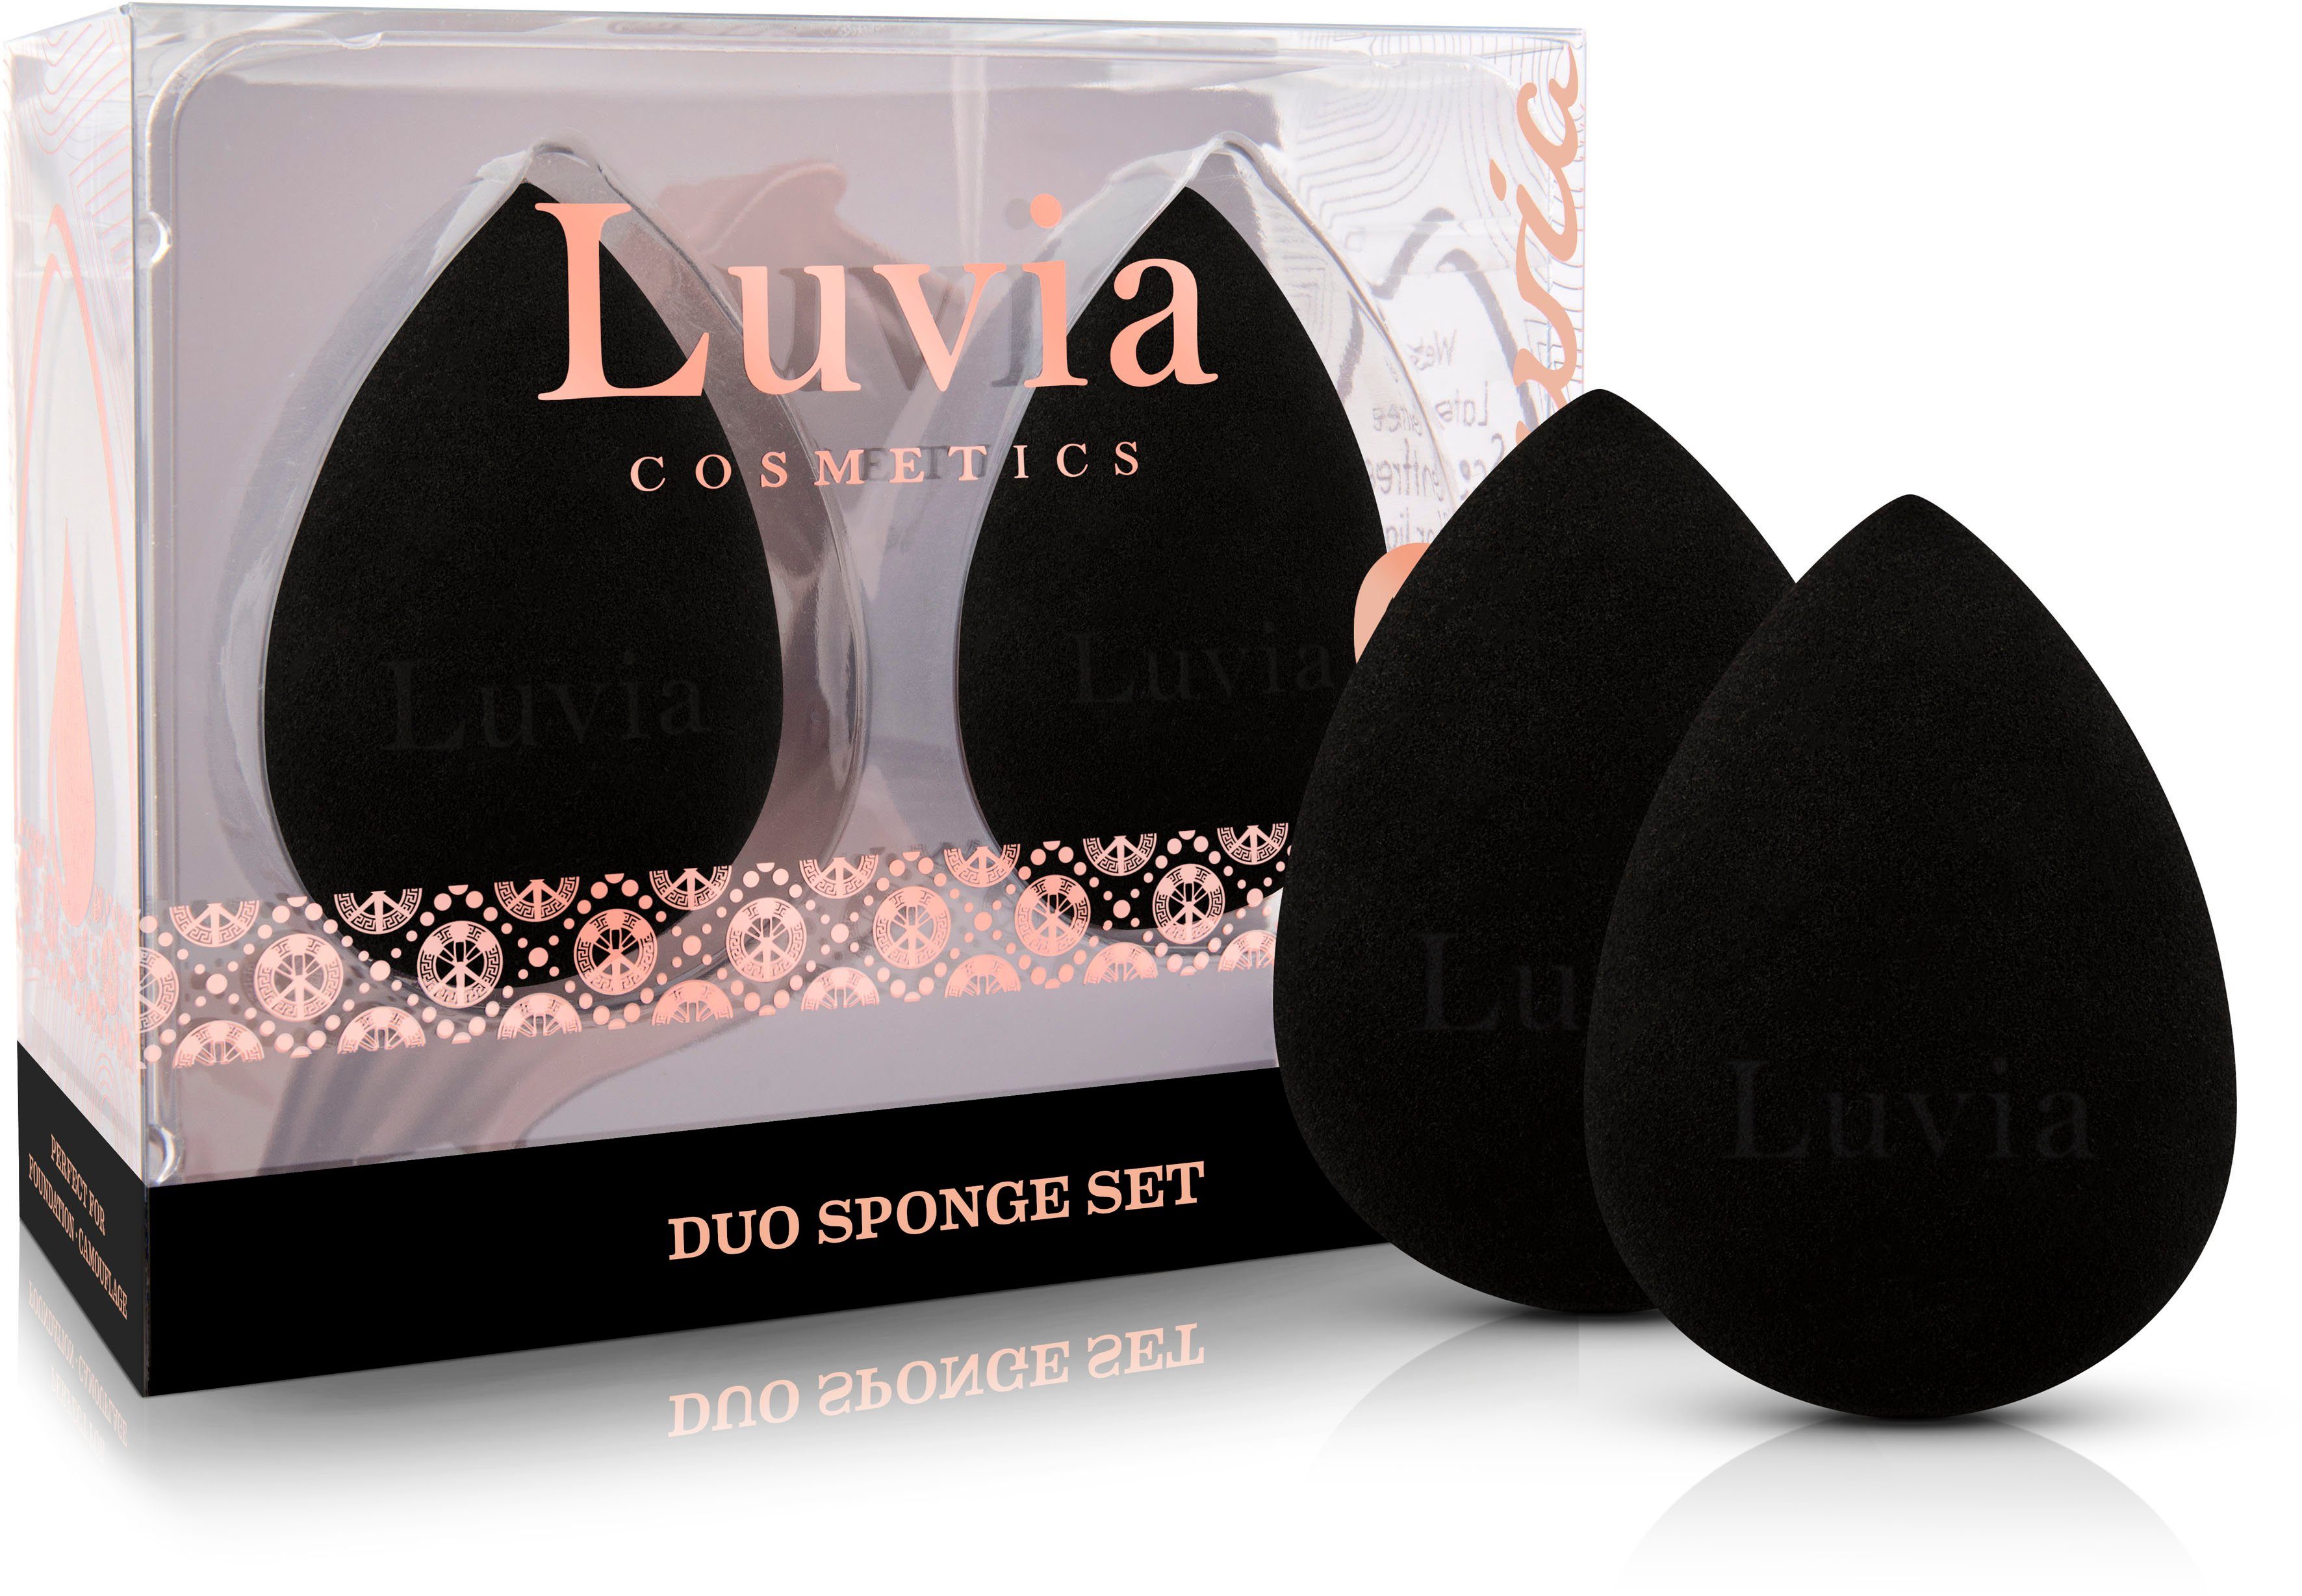 Sponge Make-up tlg. 2 Blending Luvia Cosmetics Set-Black, Make-up Schwamm